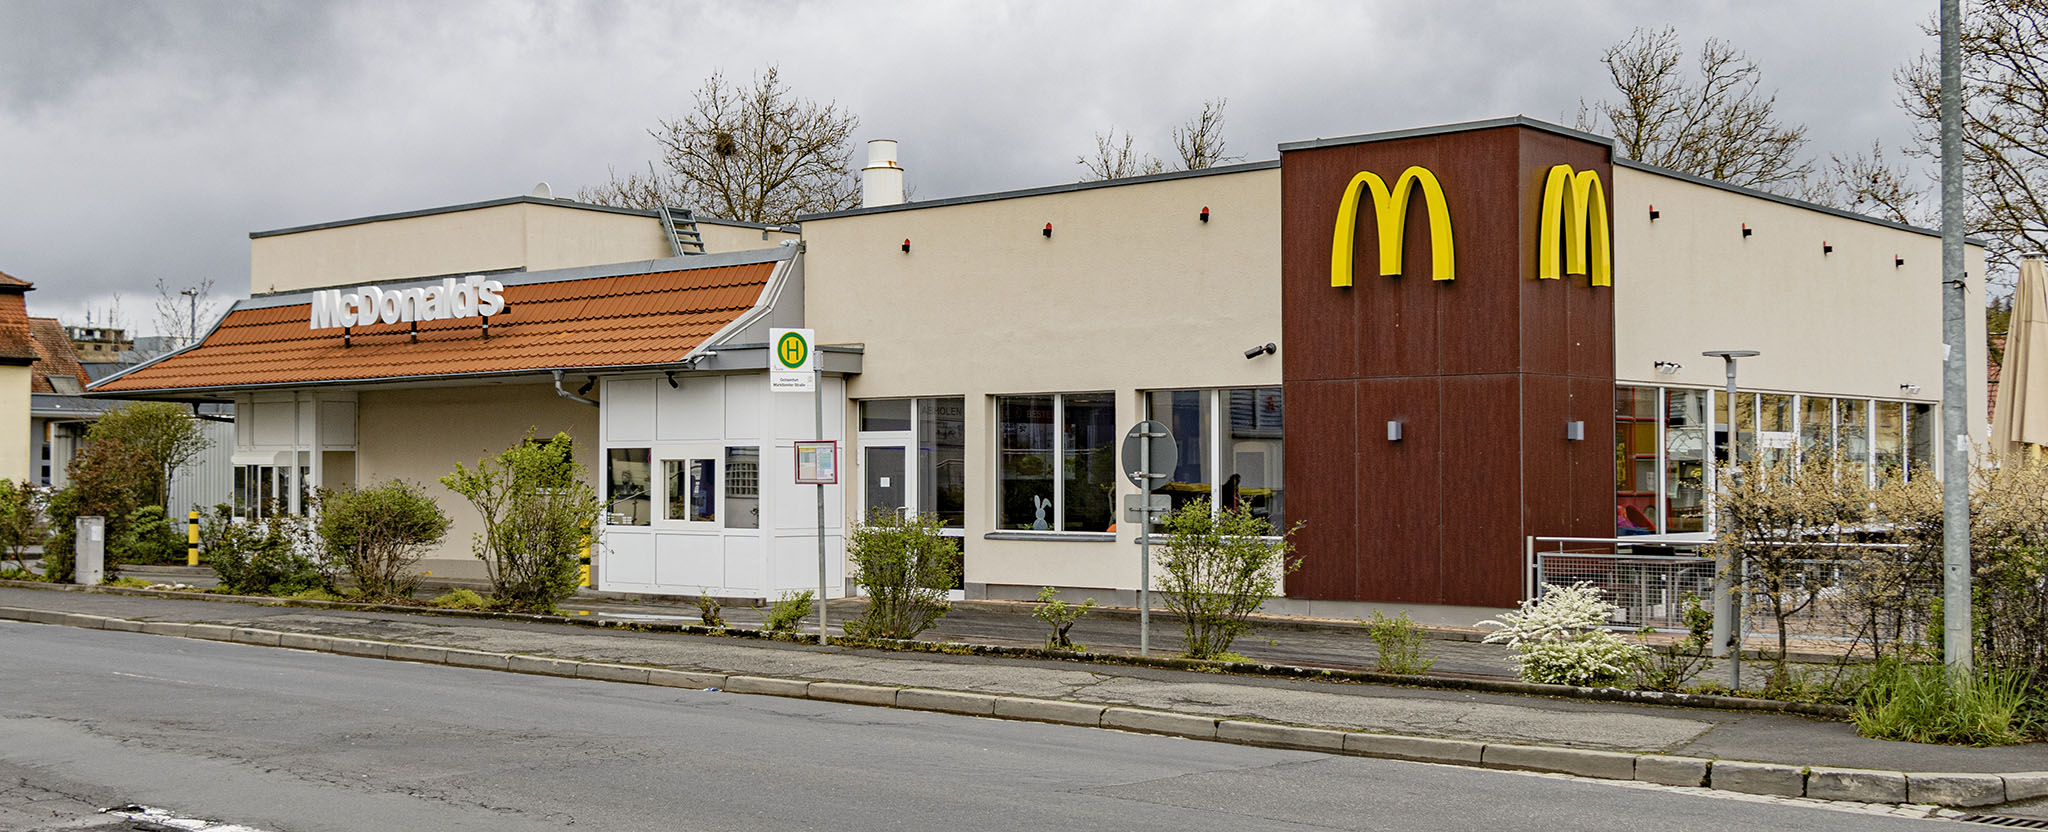 Das McDonald’s-Restaurant in Ochsenfurt